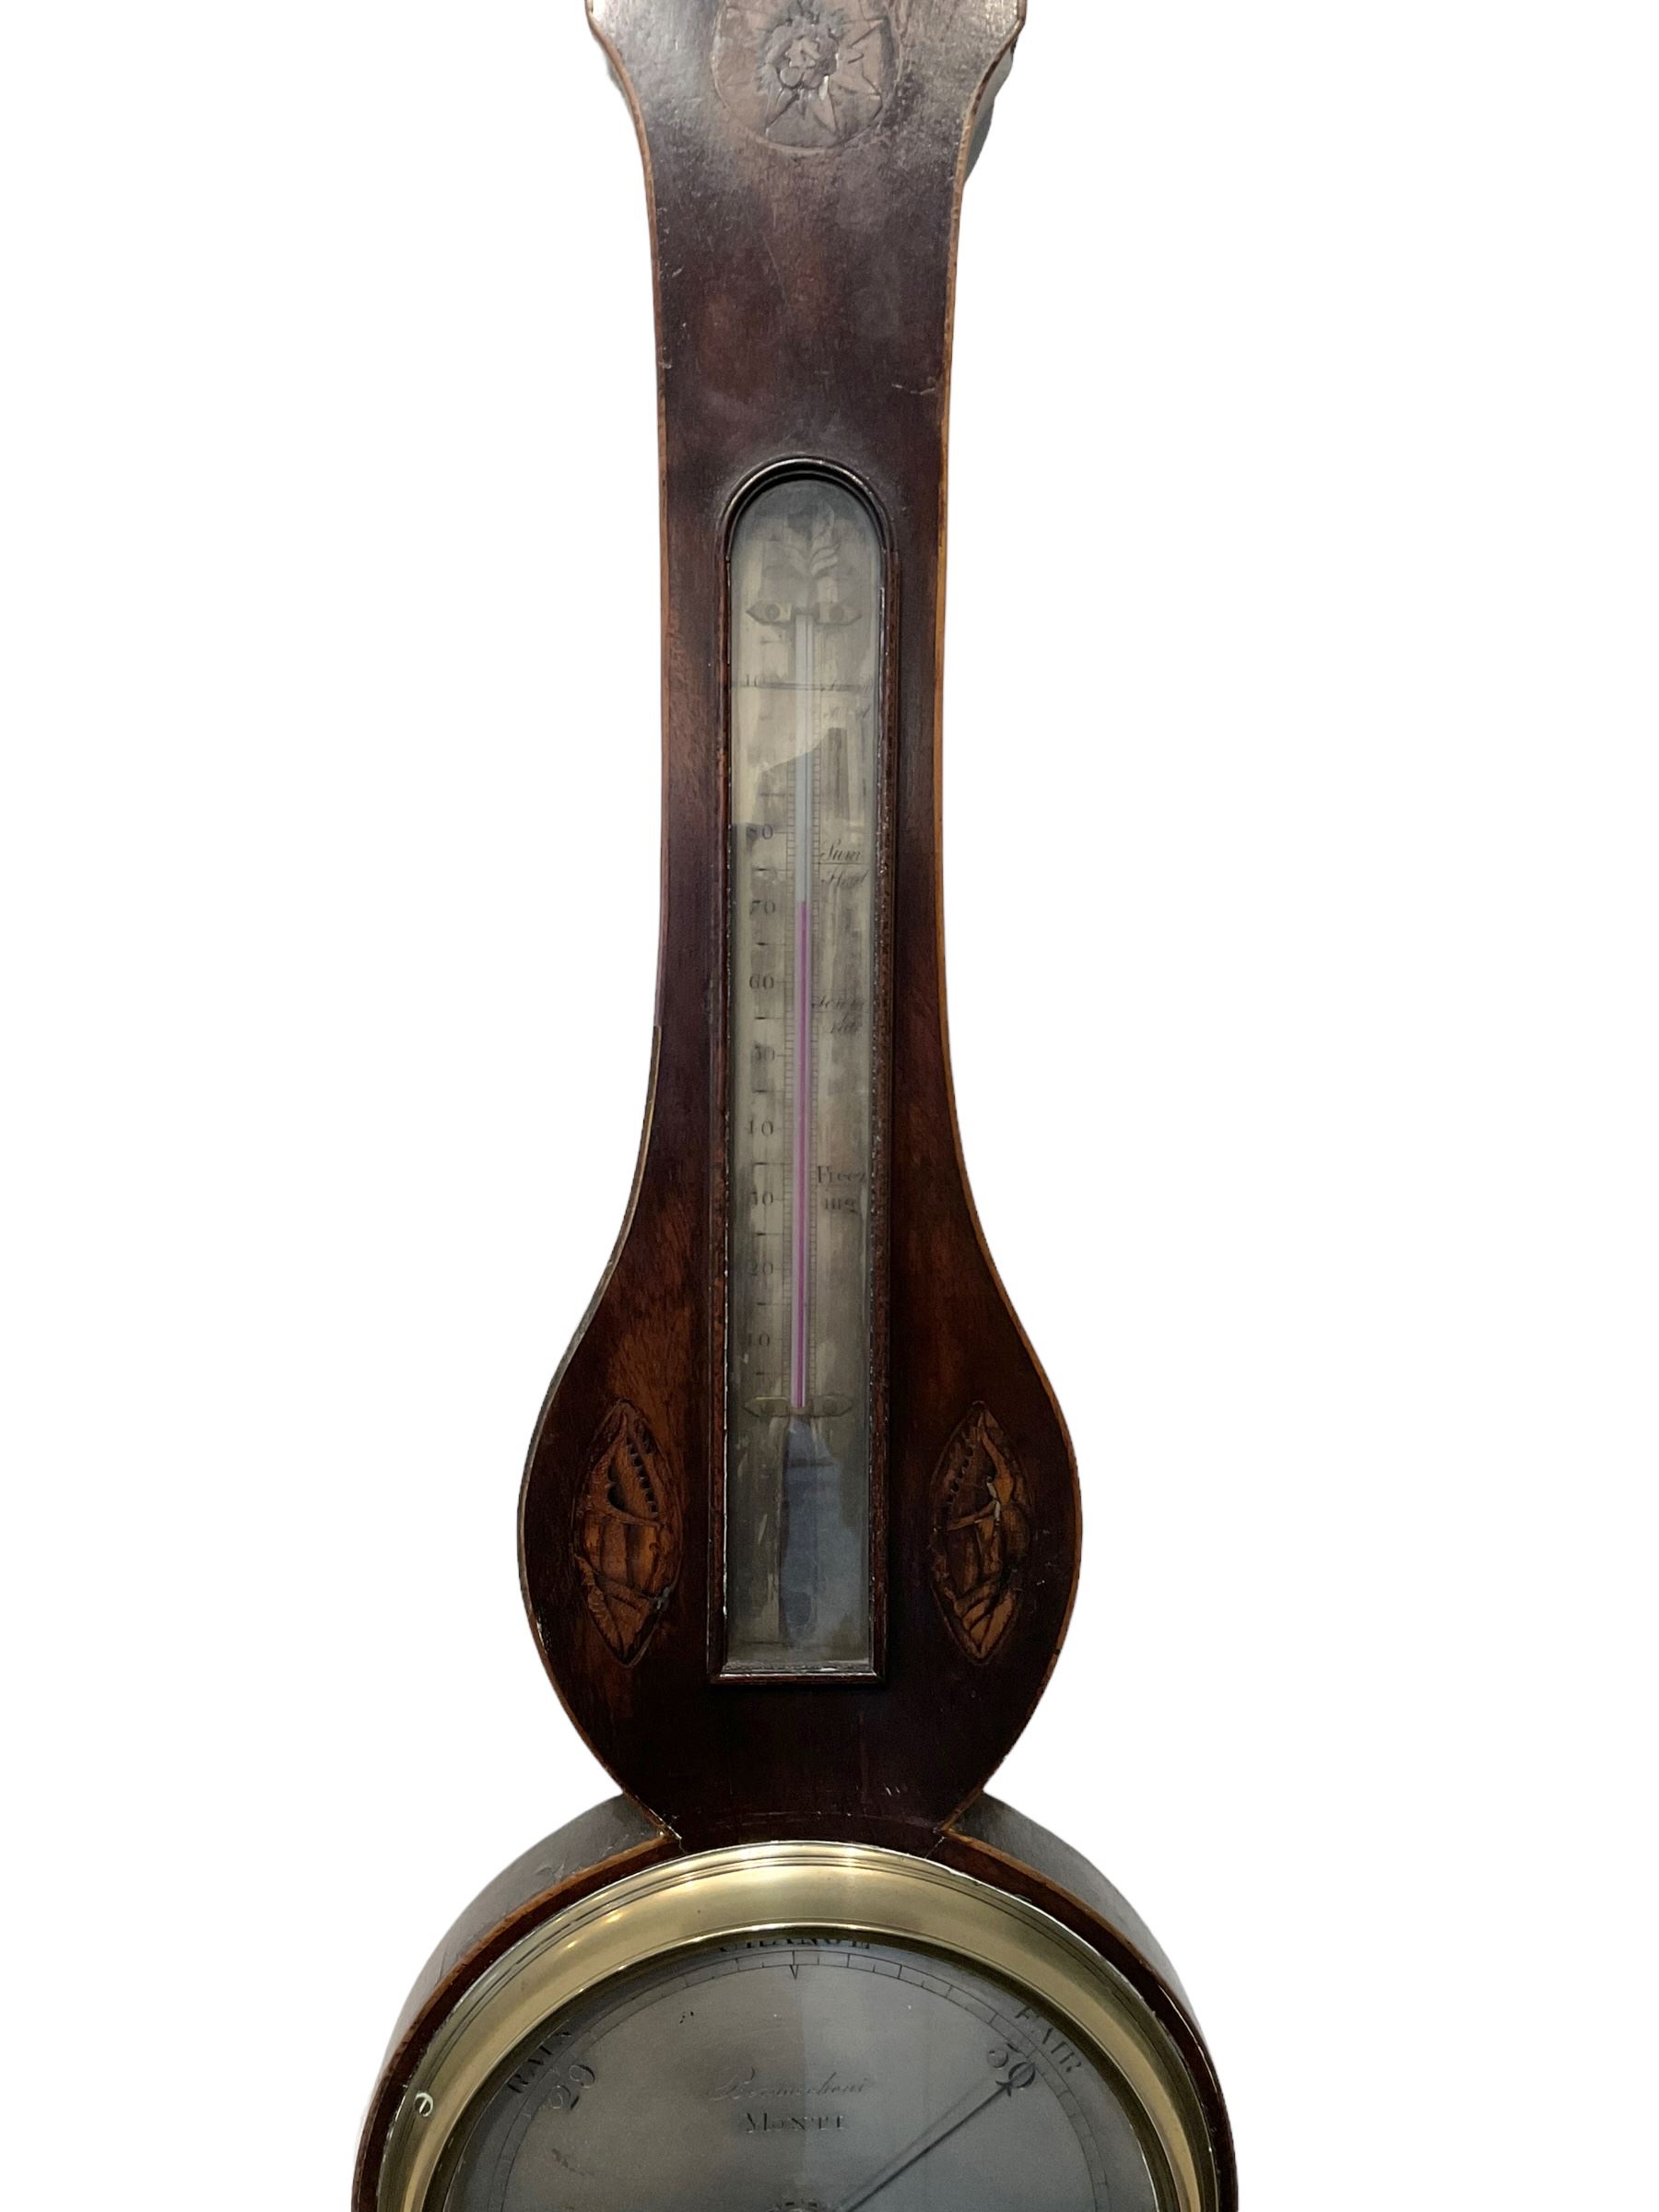 Monti - George III mercury barometer c1810 - Image 3 of 5